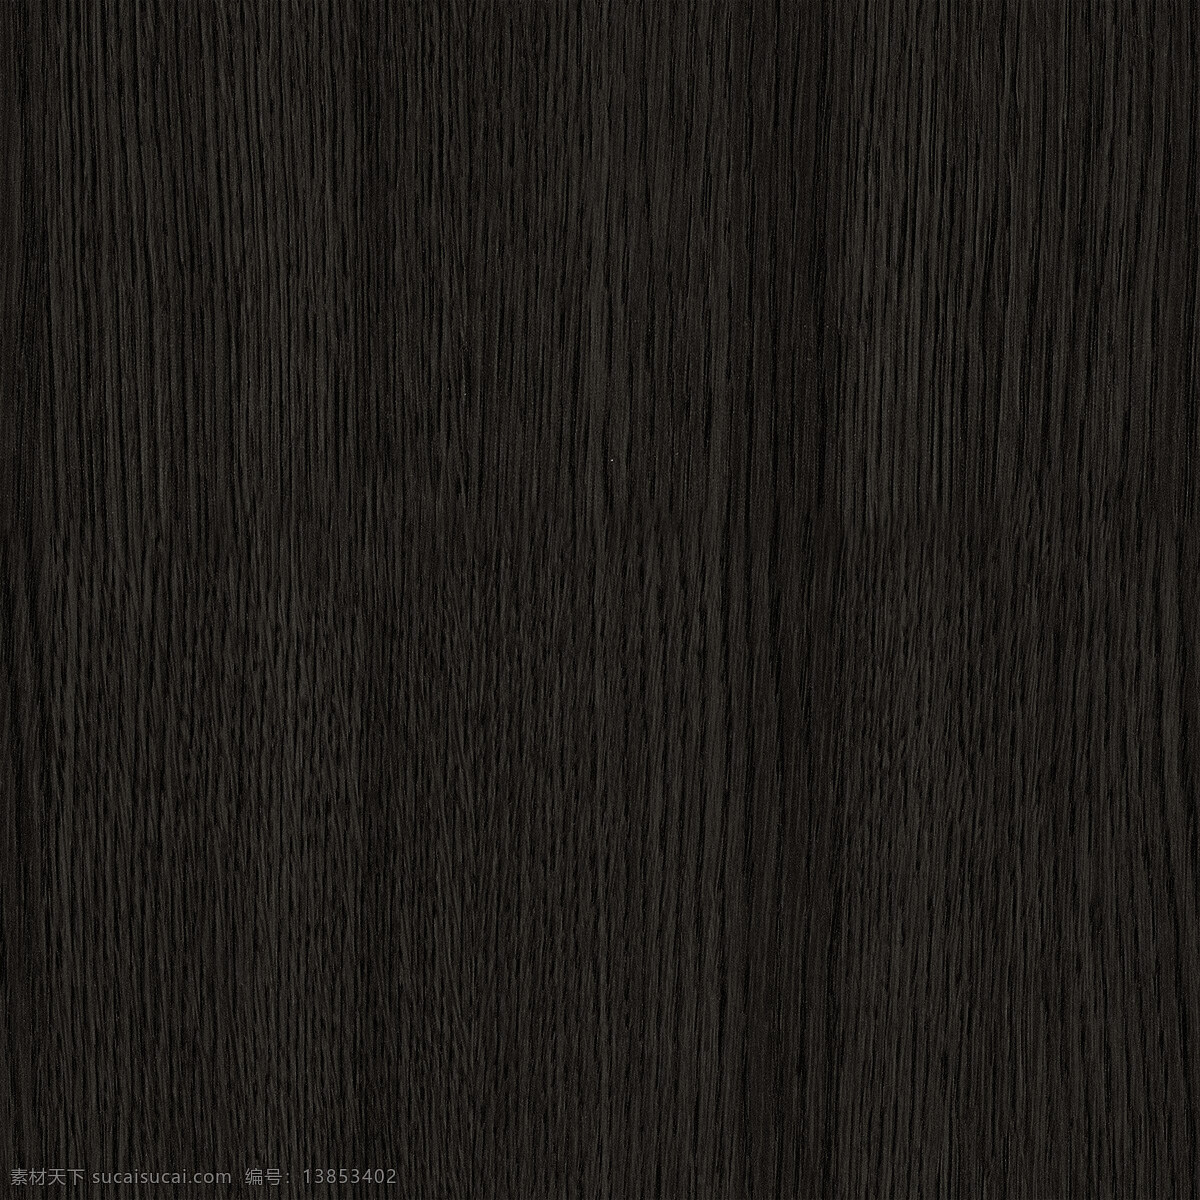 vray 木纹 材质 反射 光滑 木材 深灰色 有贴图 max2008 抛光 直纹 3d模型素材 材质贴图